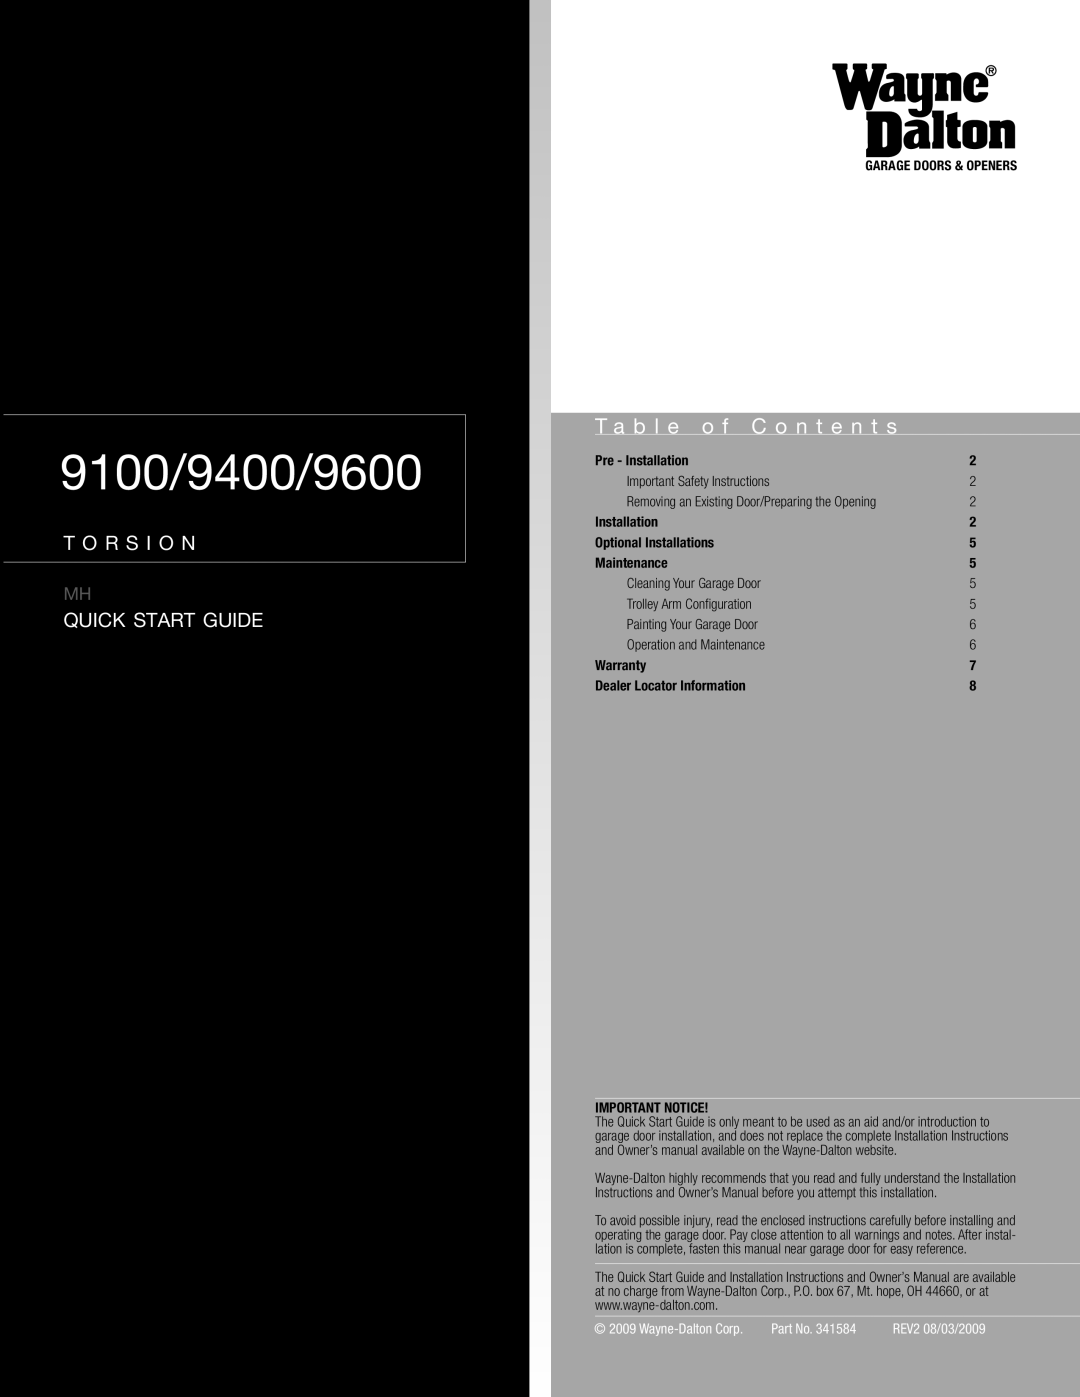 Wayne-Dalton installation instructions TorqueMaster & idrive, 9900/9600/9200/9100, Installation Instruction Supplement 